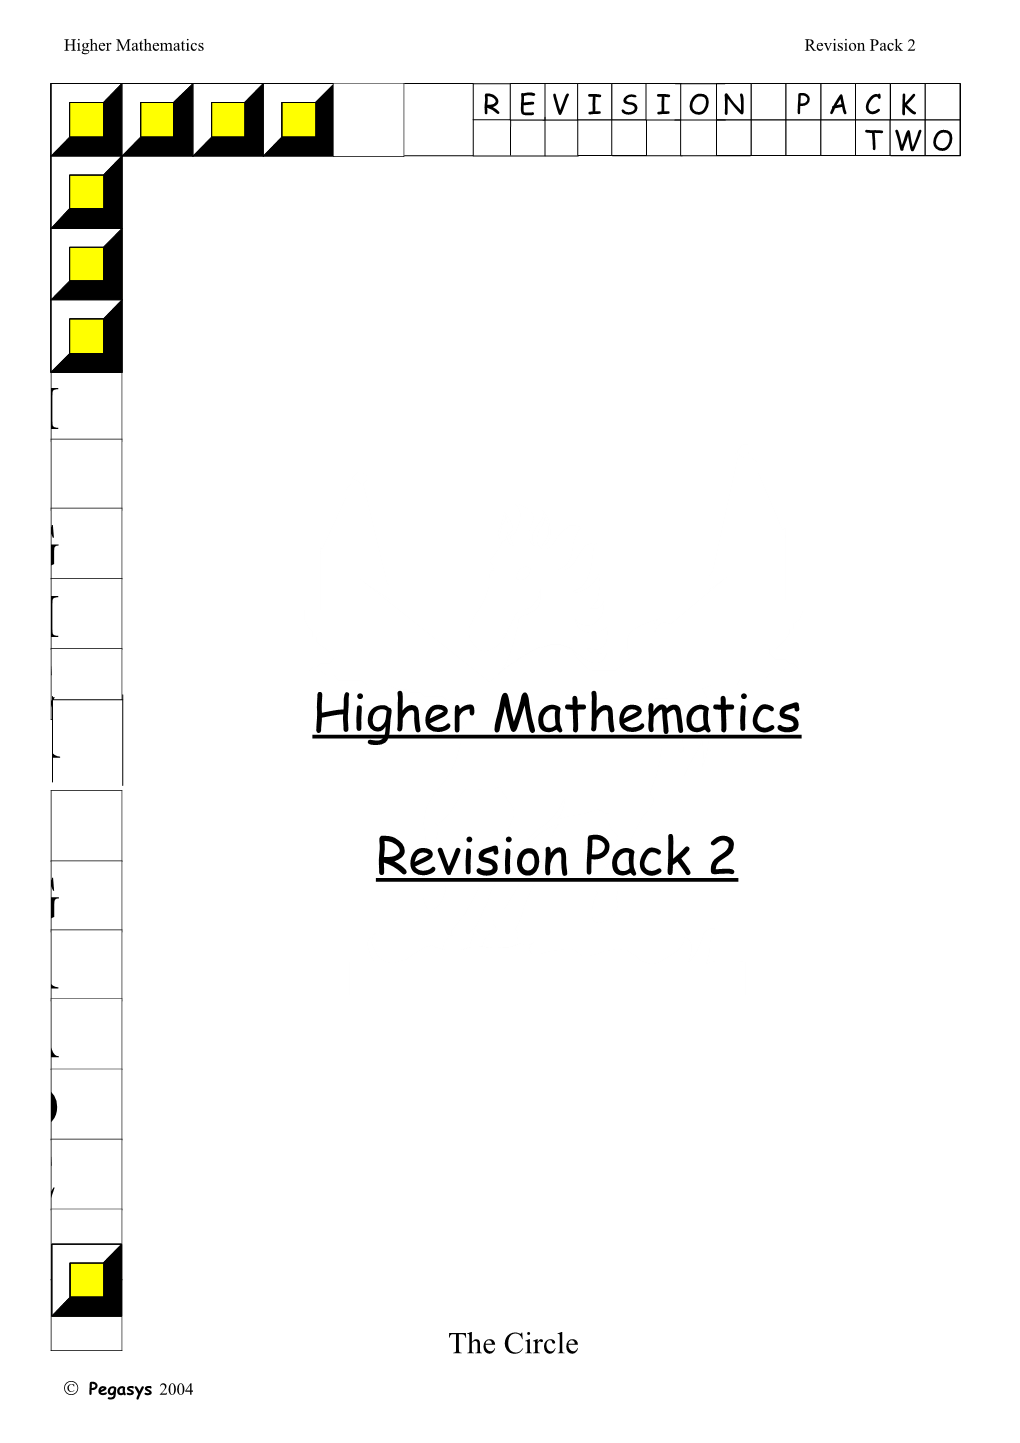 Higher Mathematics Revision Pack 2